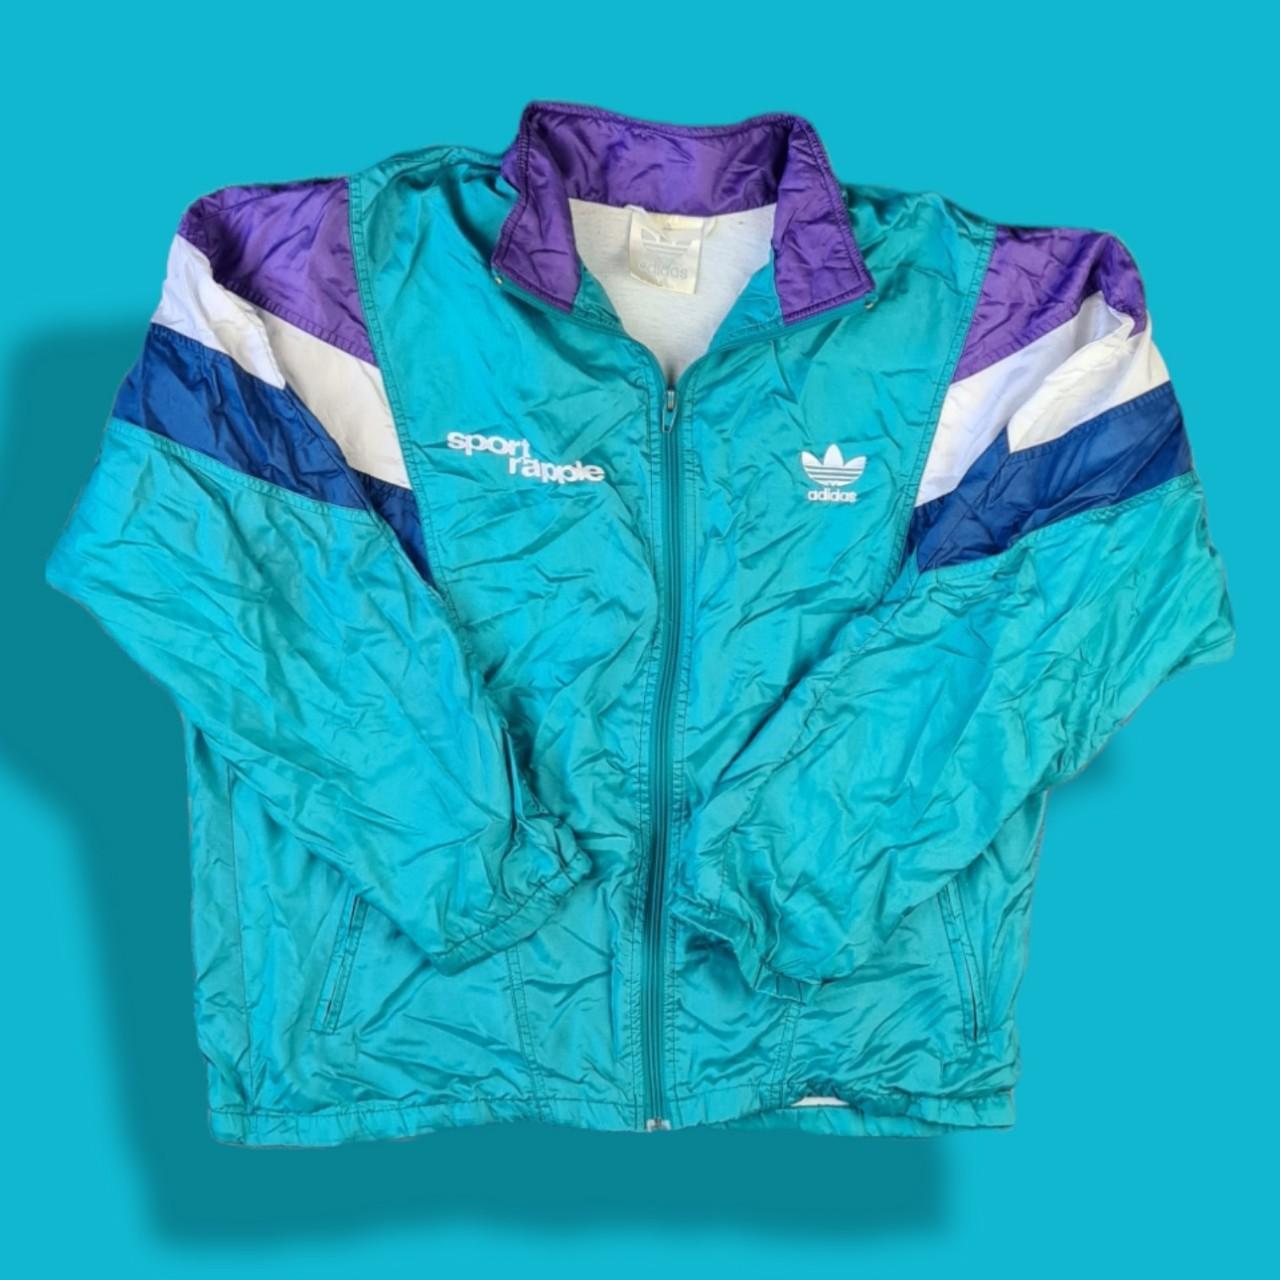 Vintage 80's Adidas Originals Windbreaker/Shell Suit... Depop